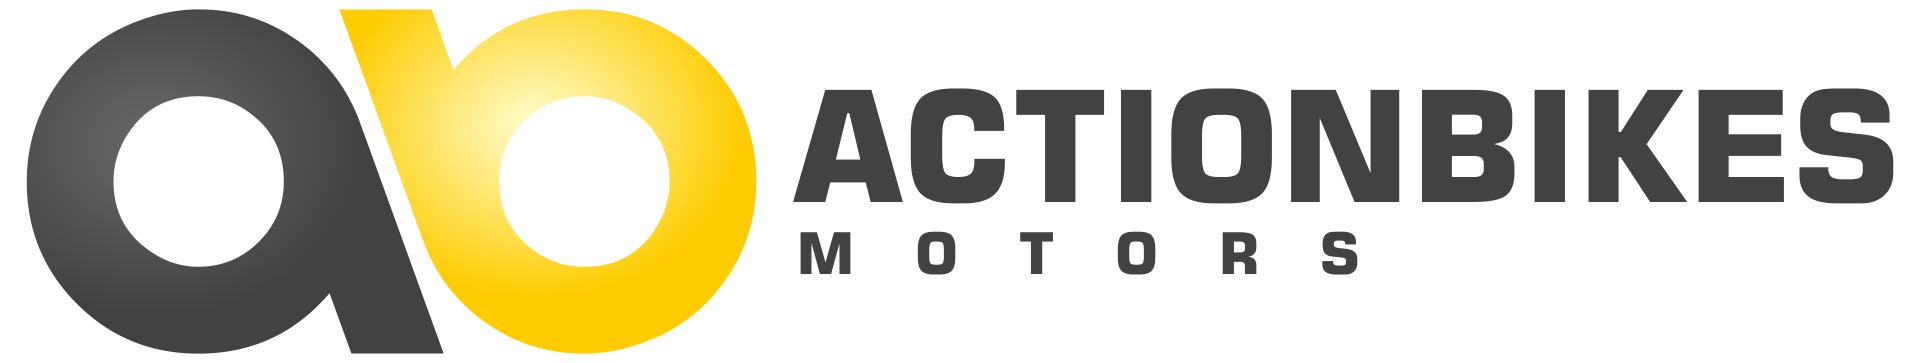 Actionbikes Logo.